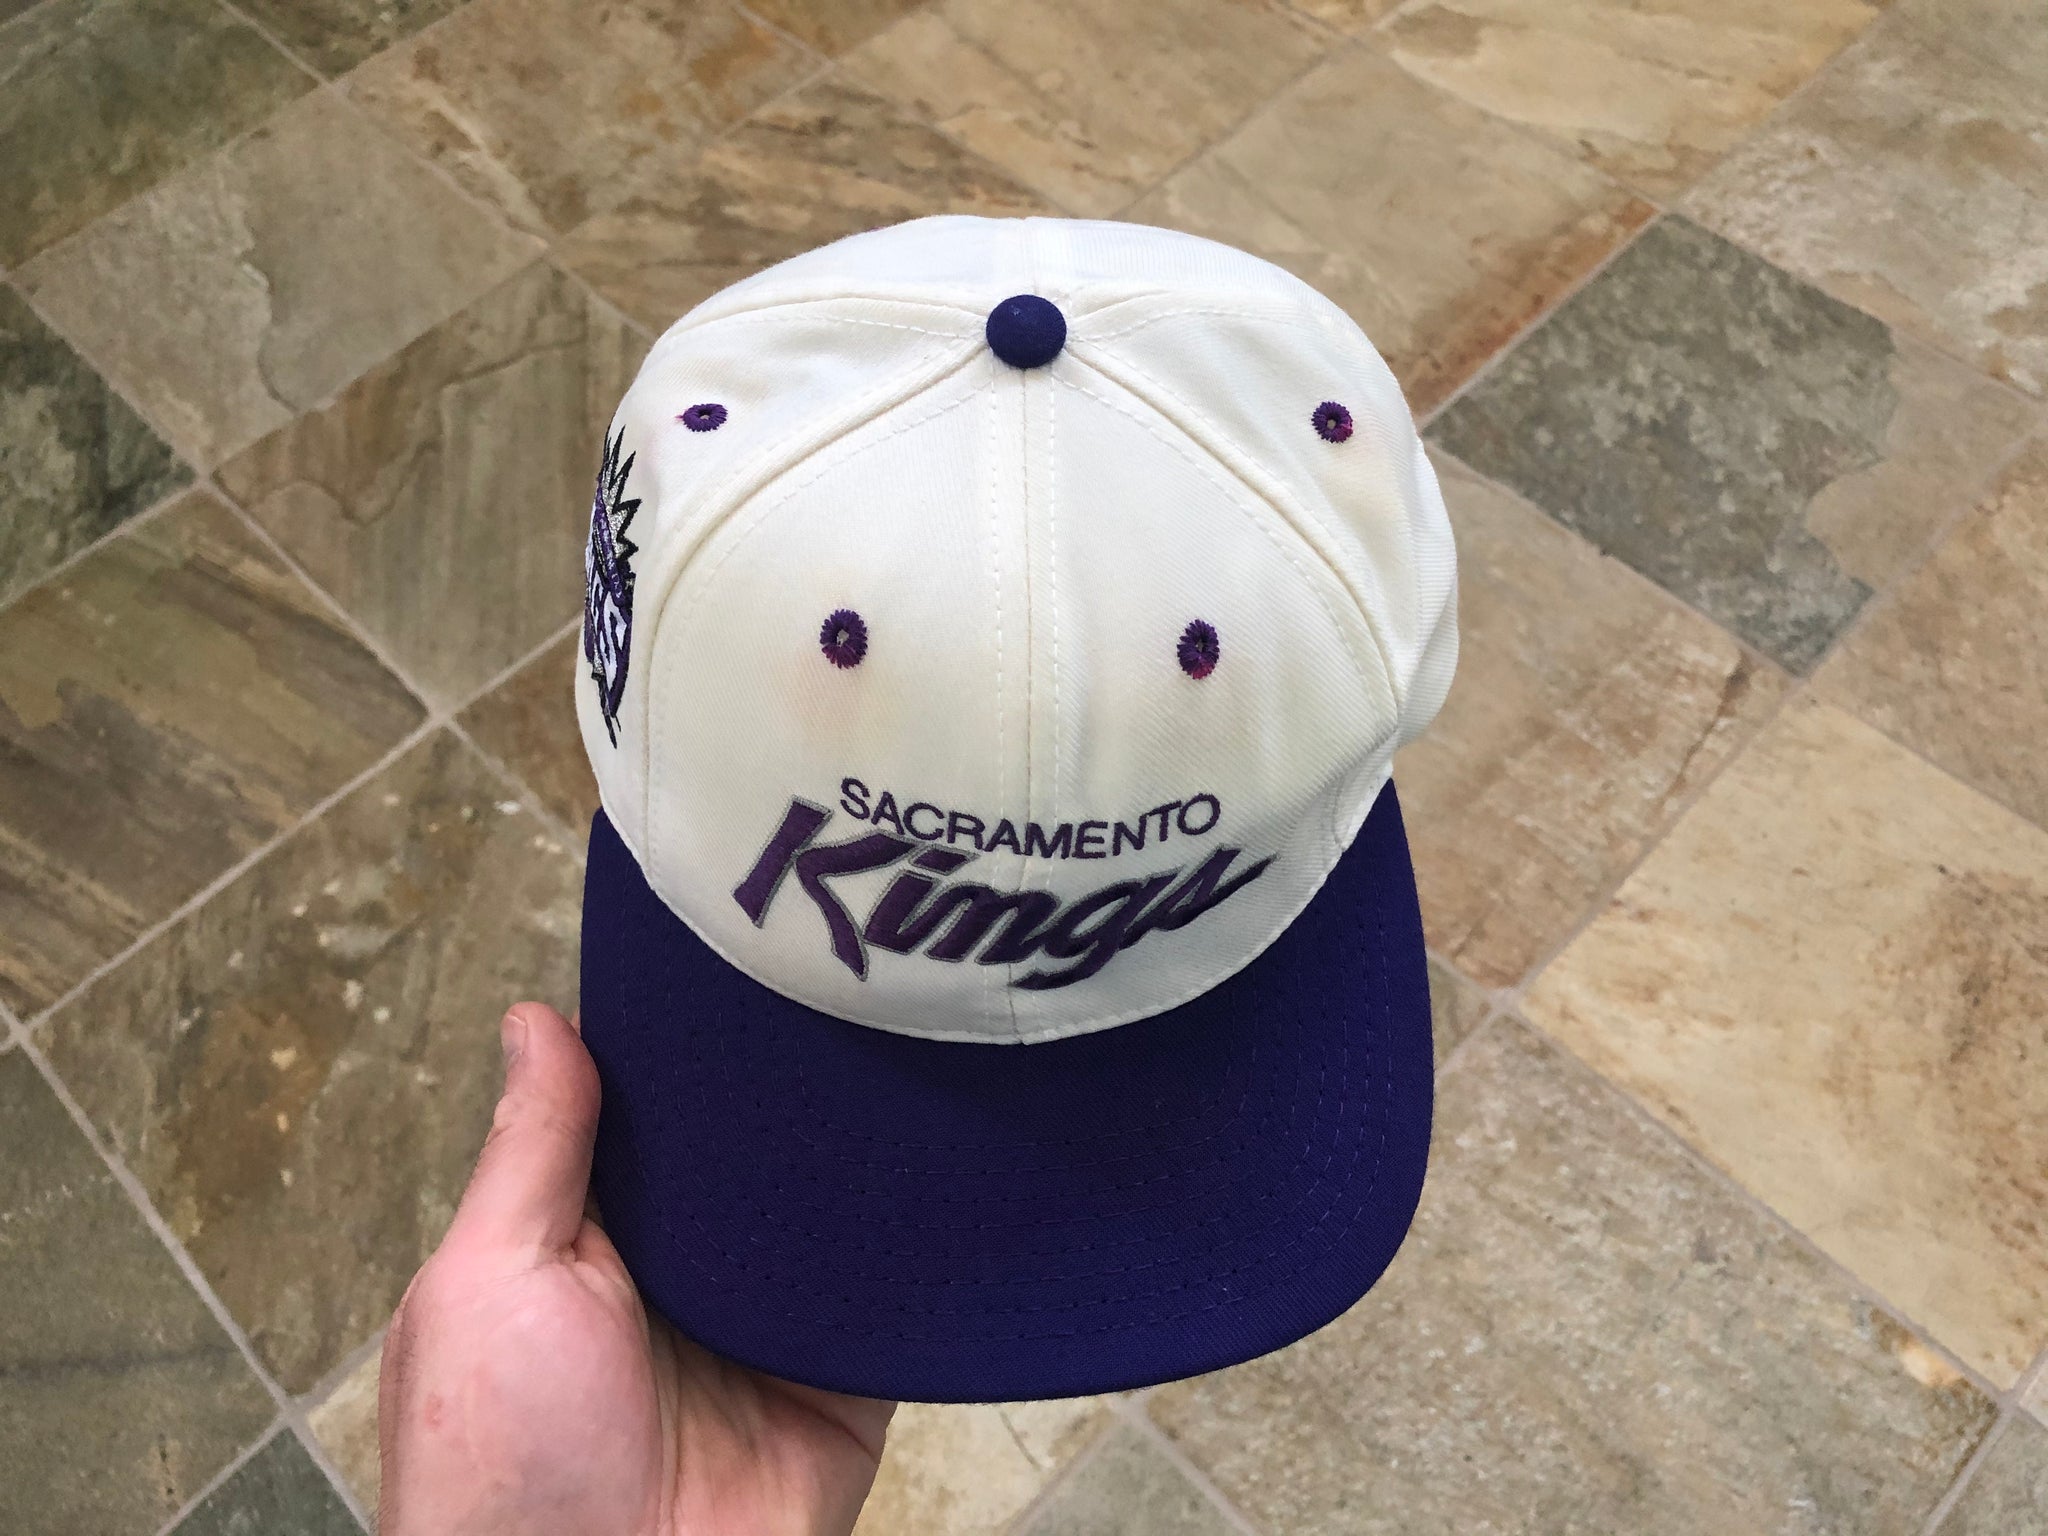 Vintage Sacramento Kings Starter Tailsweep Snapback Basketball Hat